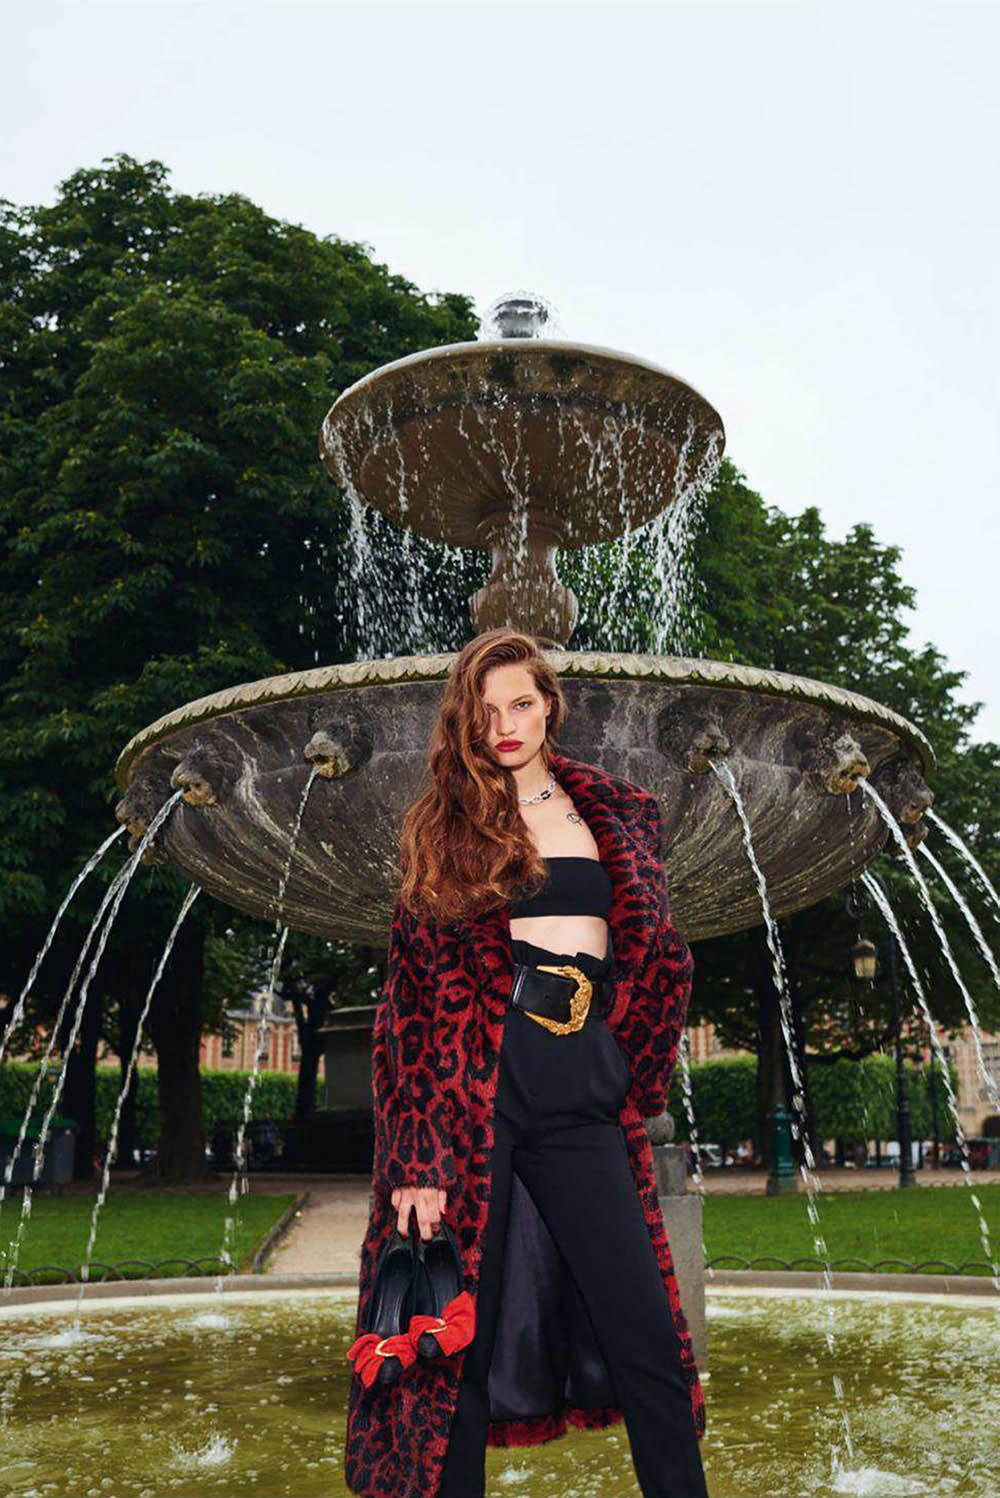 Faretta Radic covers Vogue Russia August 2018 by Olivier Zahm